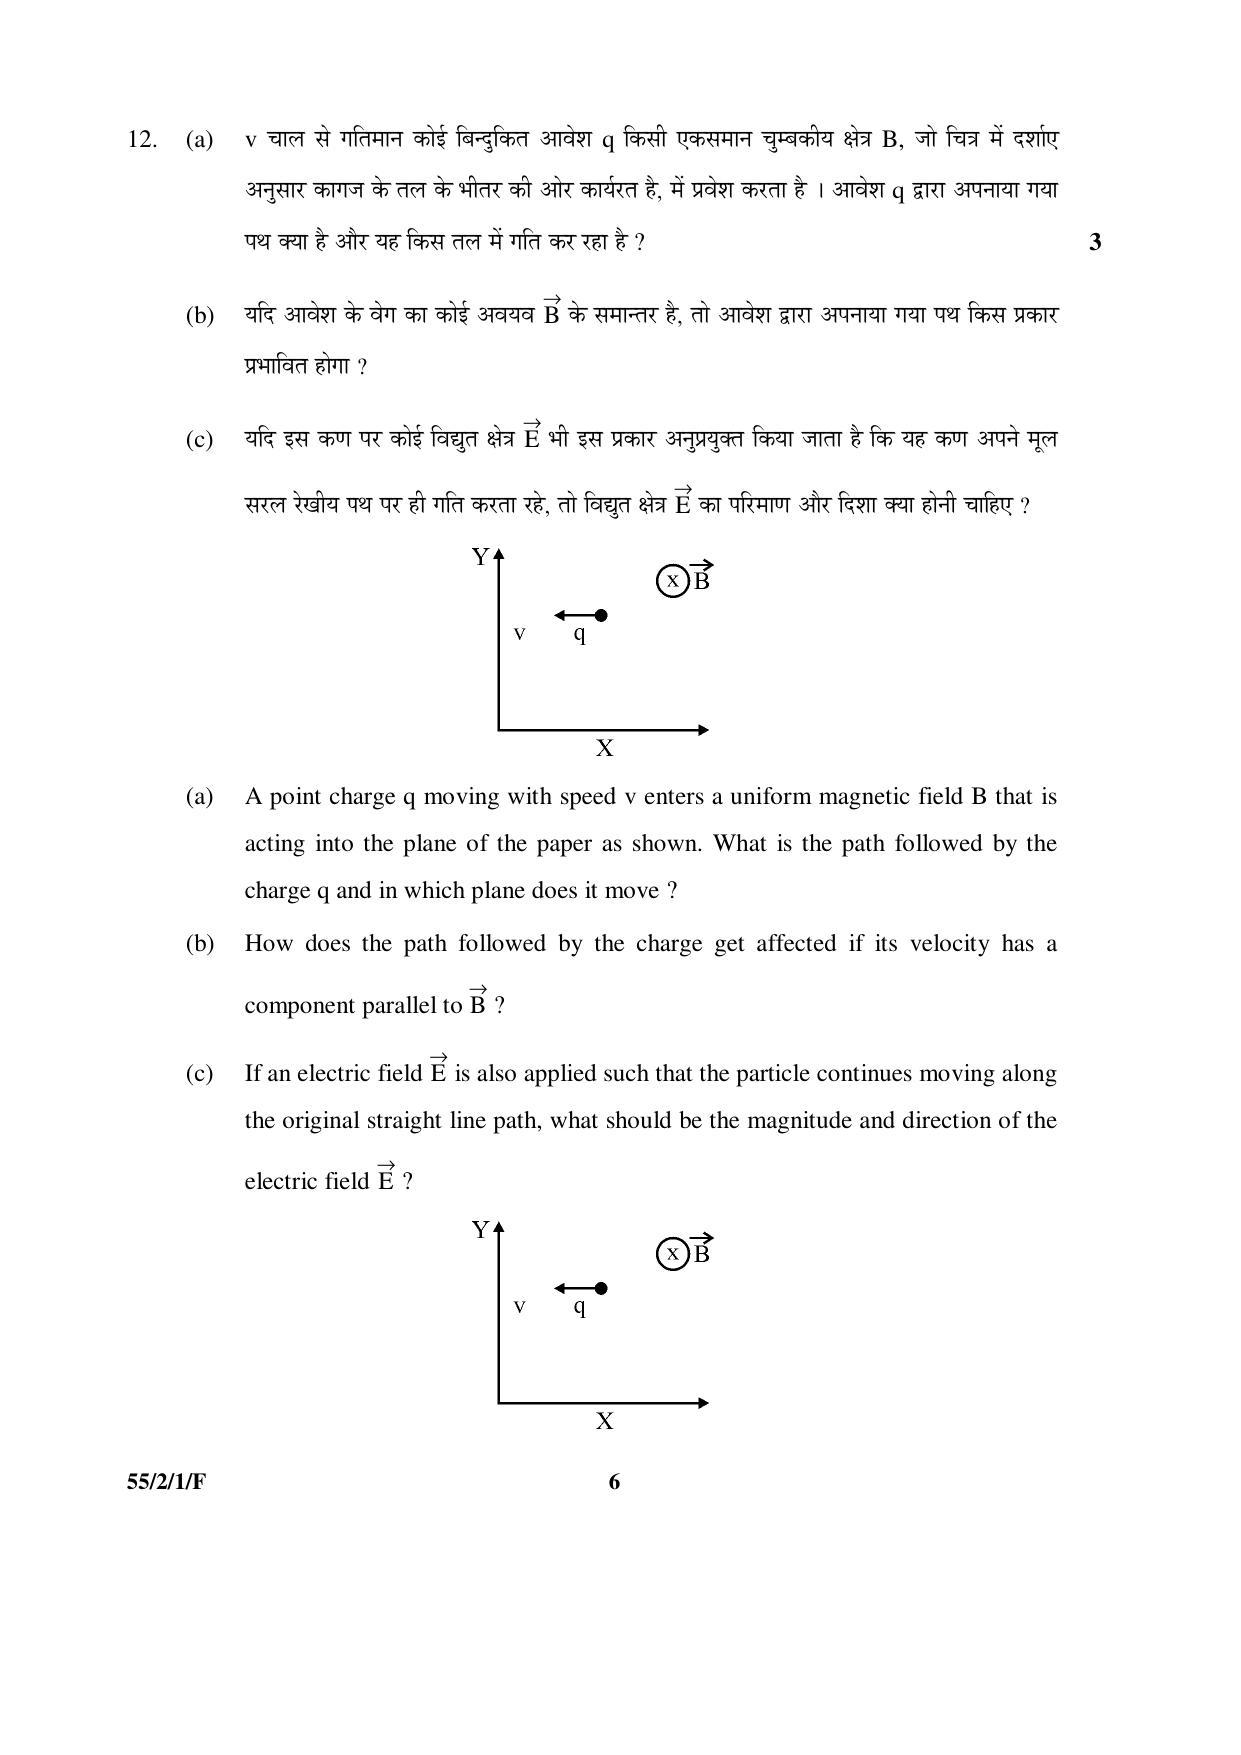 CBSE Class 12 55-2-1-F _Physics_SET-1 2016 Question Paper - Page 6